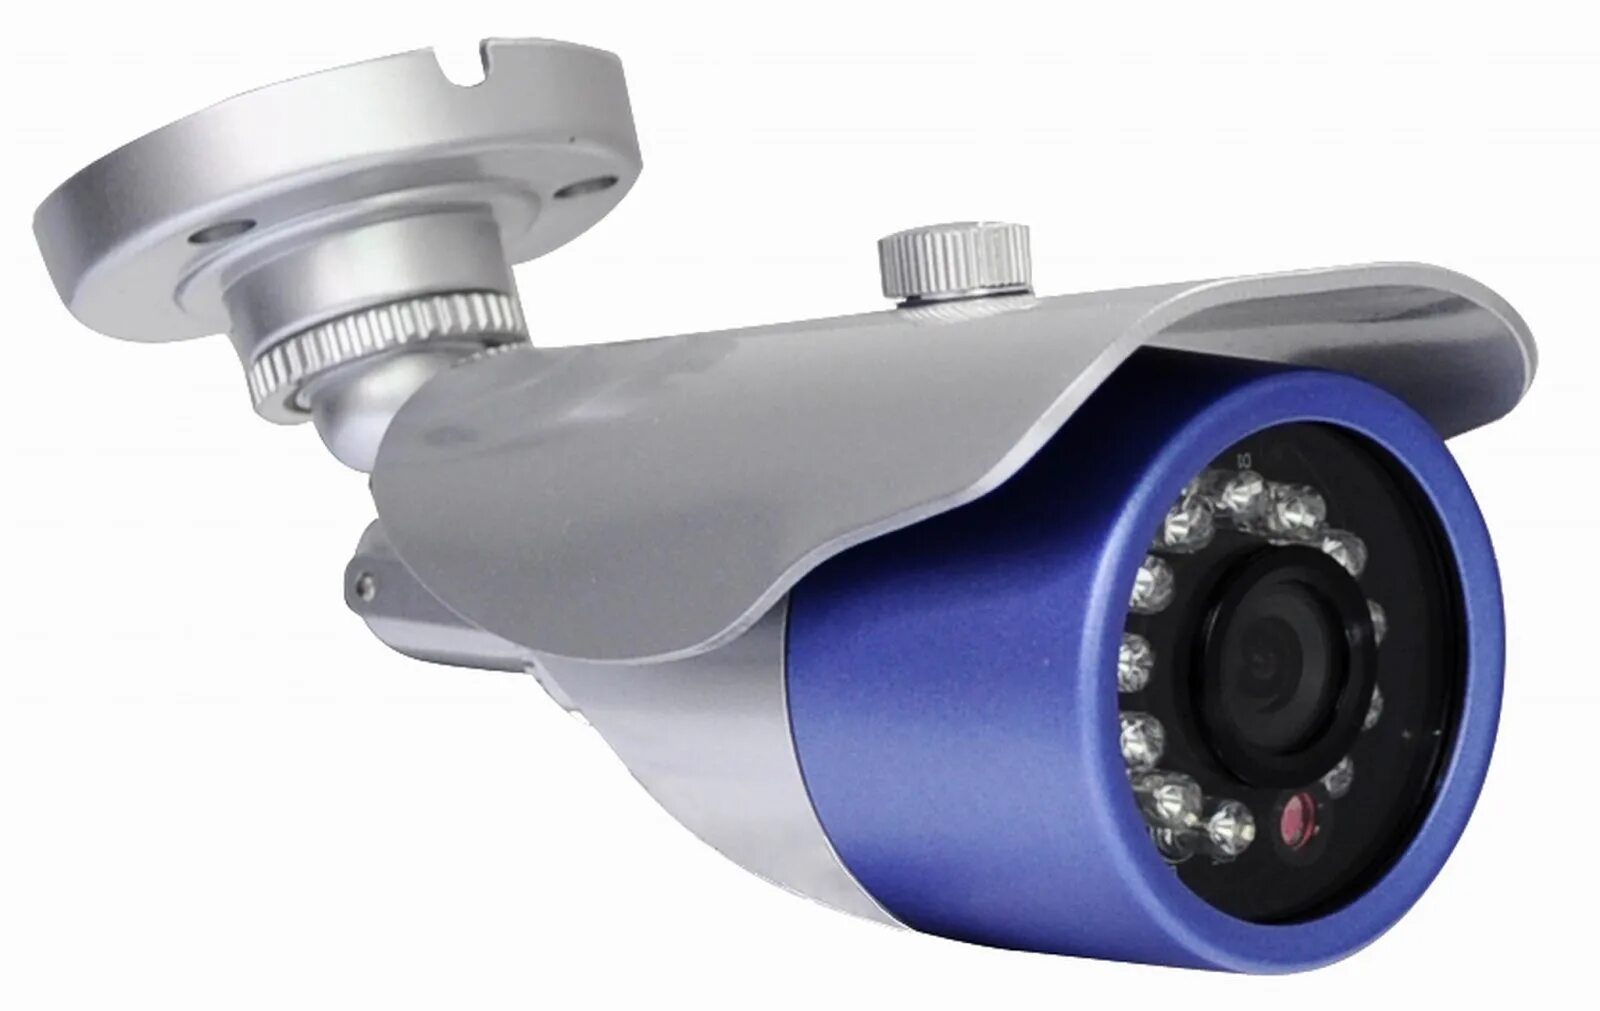 Камера тн. Камера наружного наблюдения Hikvision. NST-ipx3925 камера видеонаблюдения. Камера наблюдения Iris DF-242sh. CCTV камера 3д.